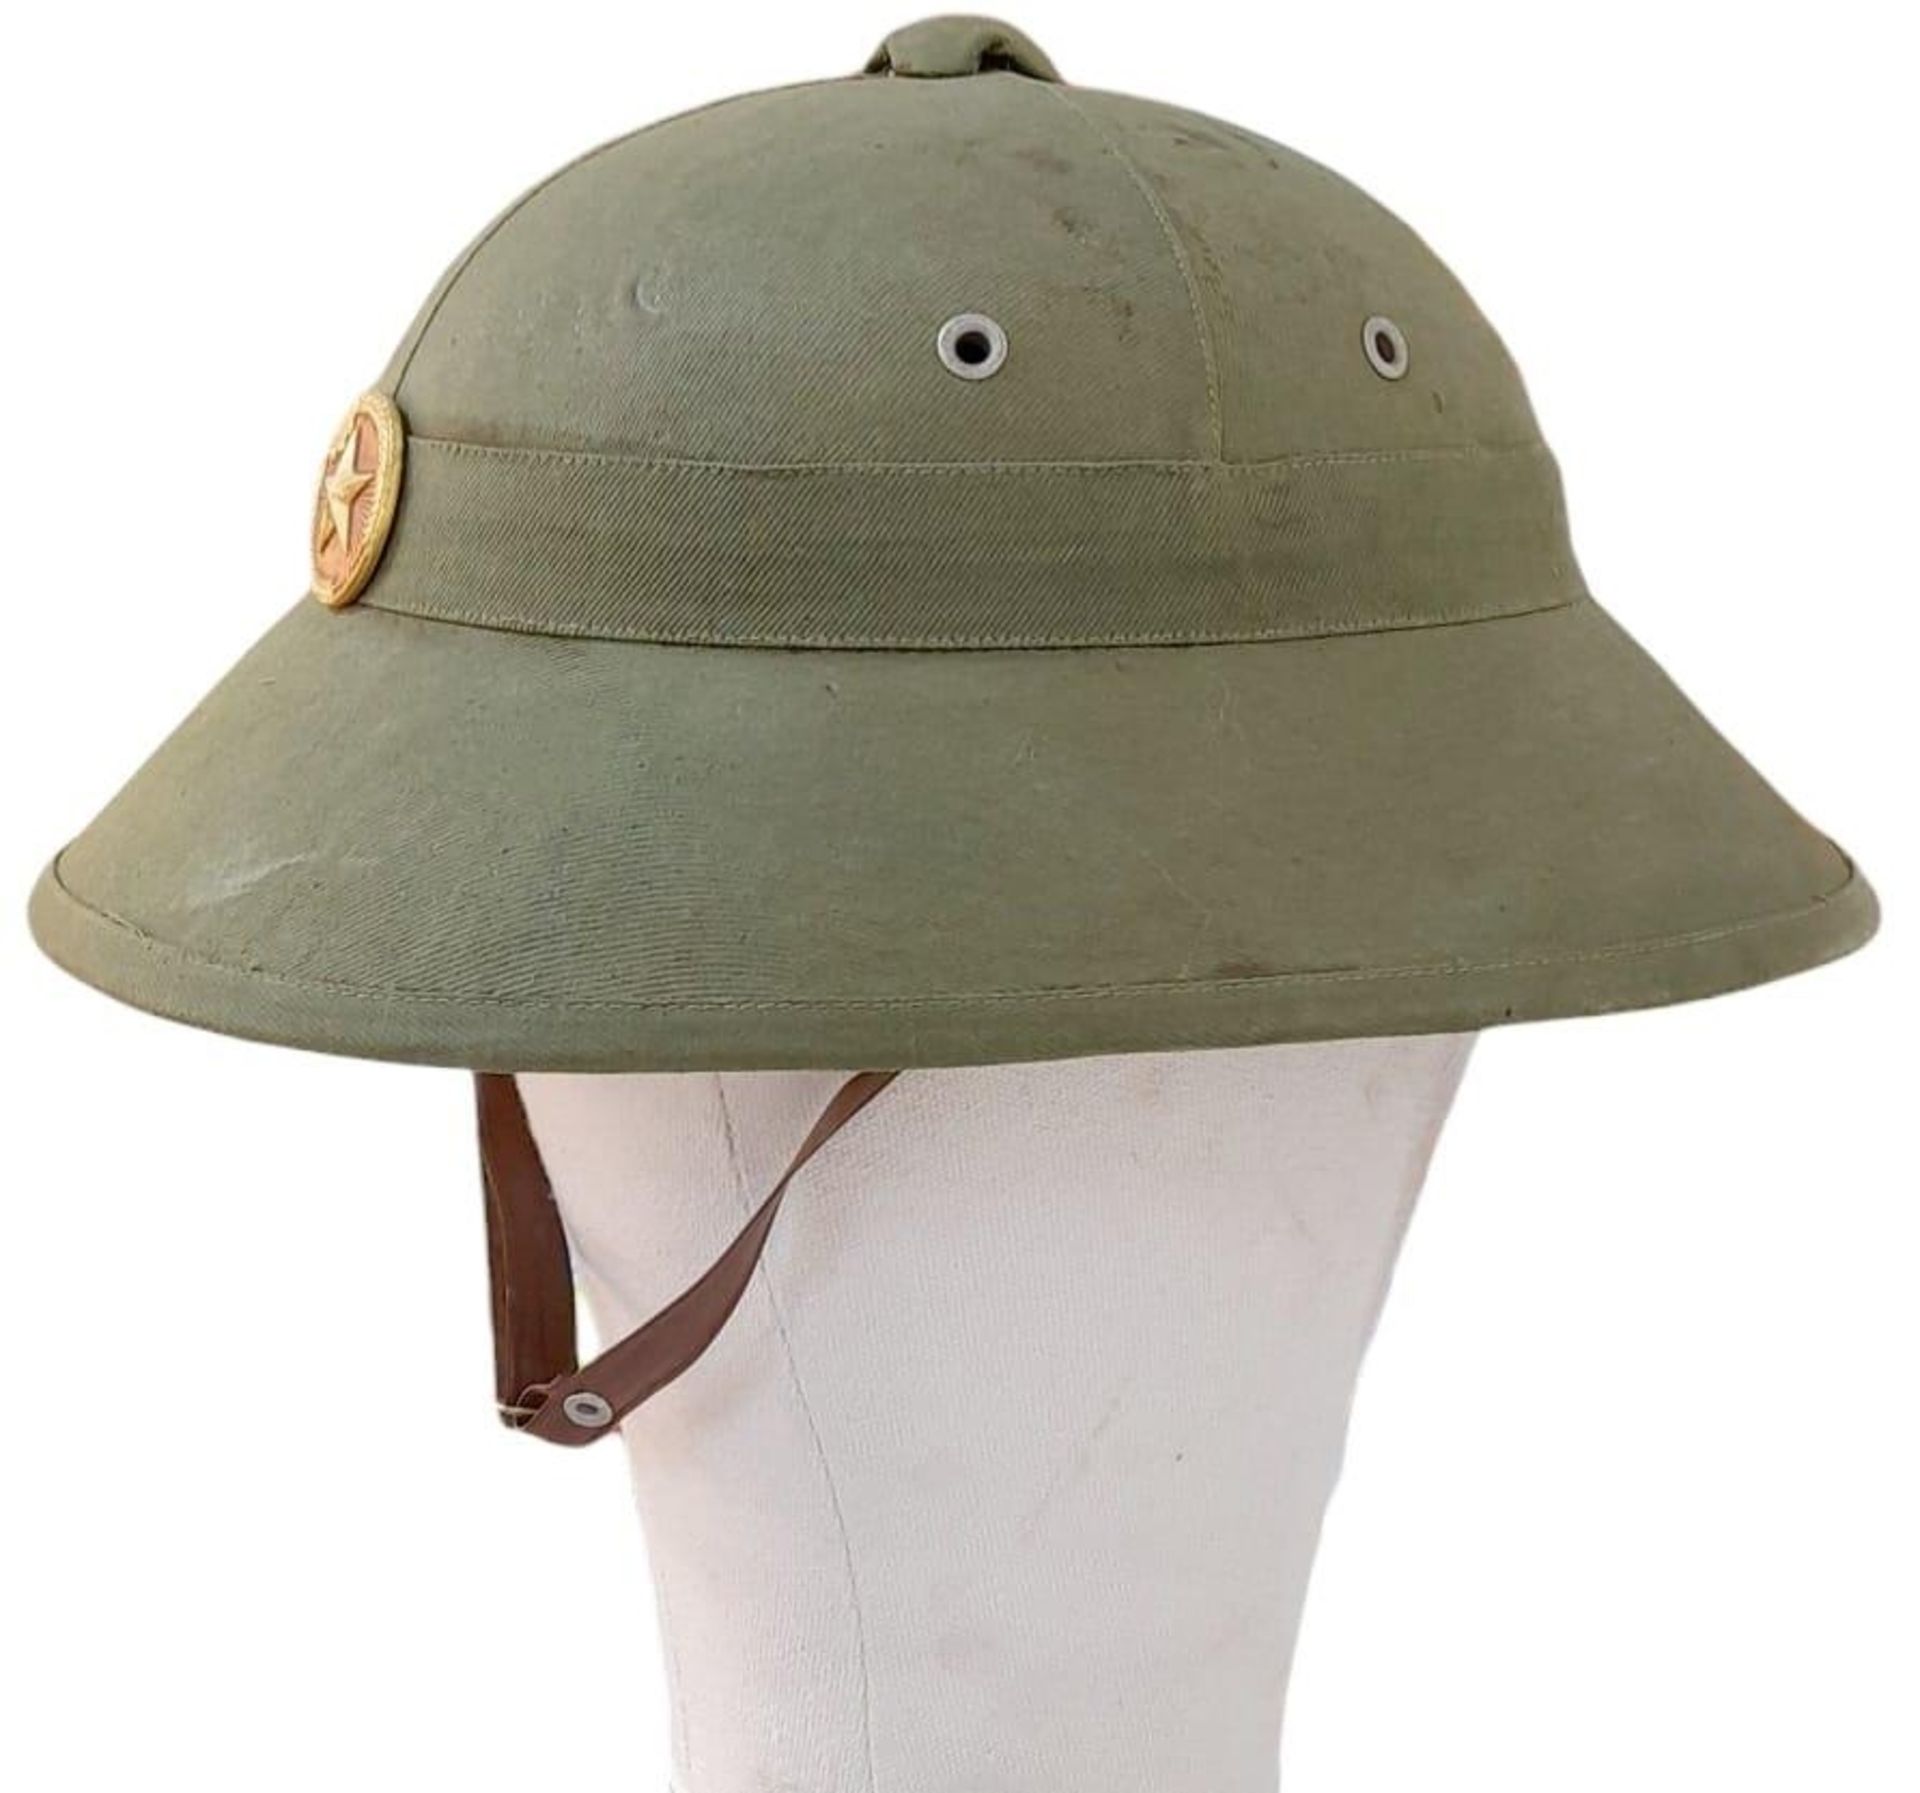 Vietnam War Era North Vietnamese Army (NVA) Fiber Helmet. - Image 2 of 5